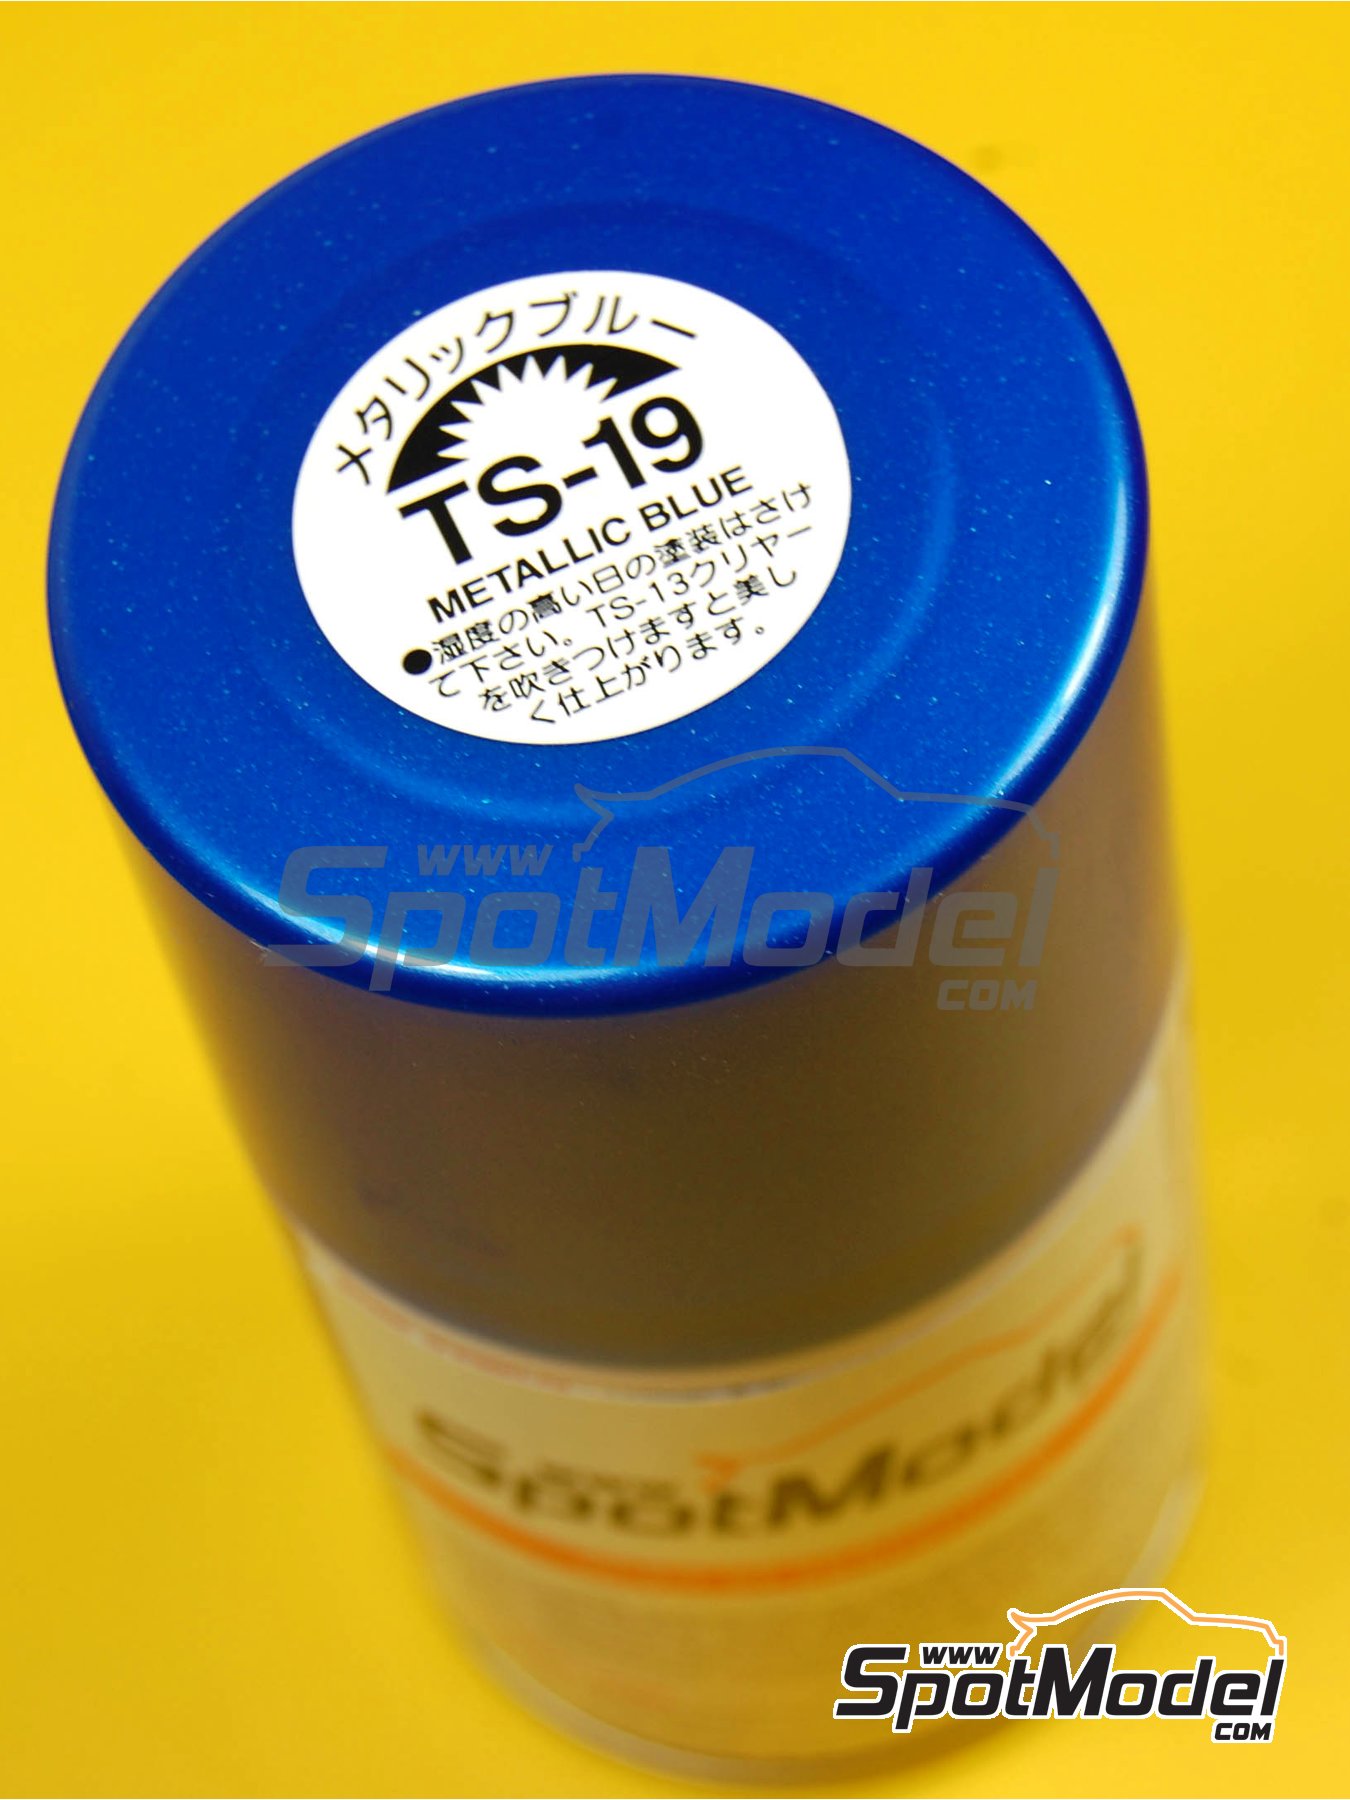 Tamiya Color TS-13 Gloss Clear (100ml)